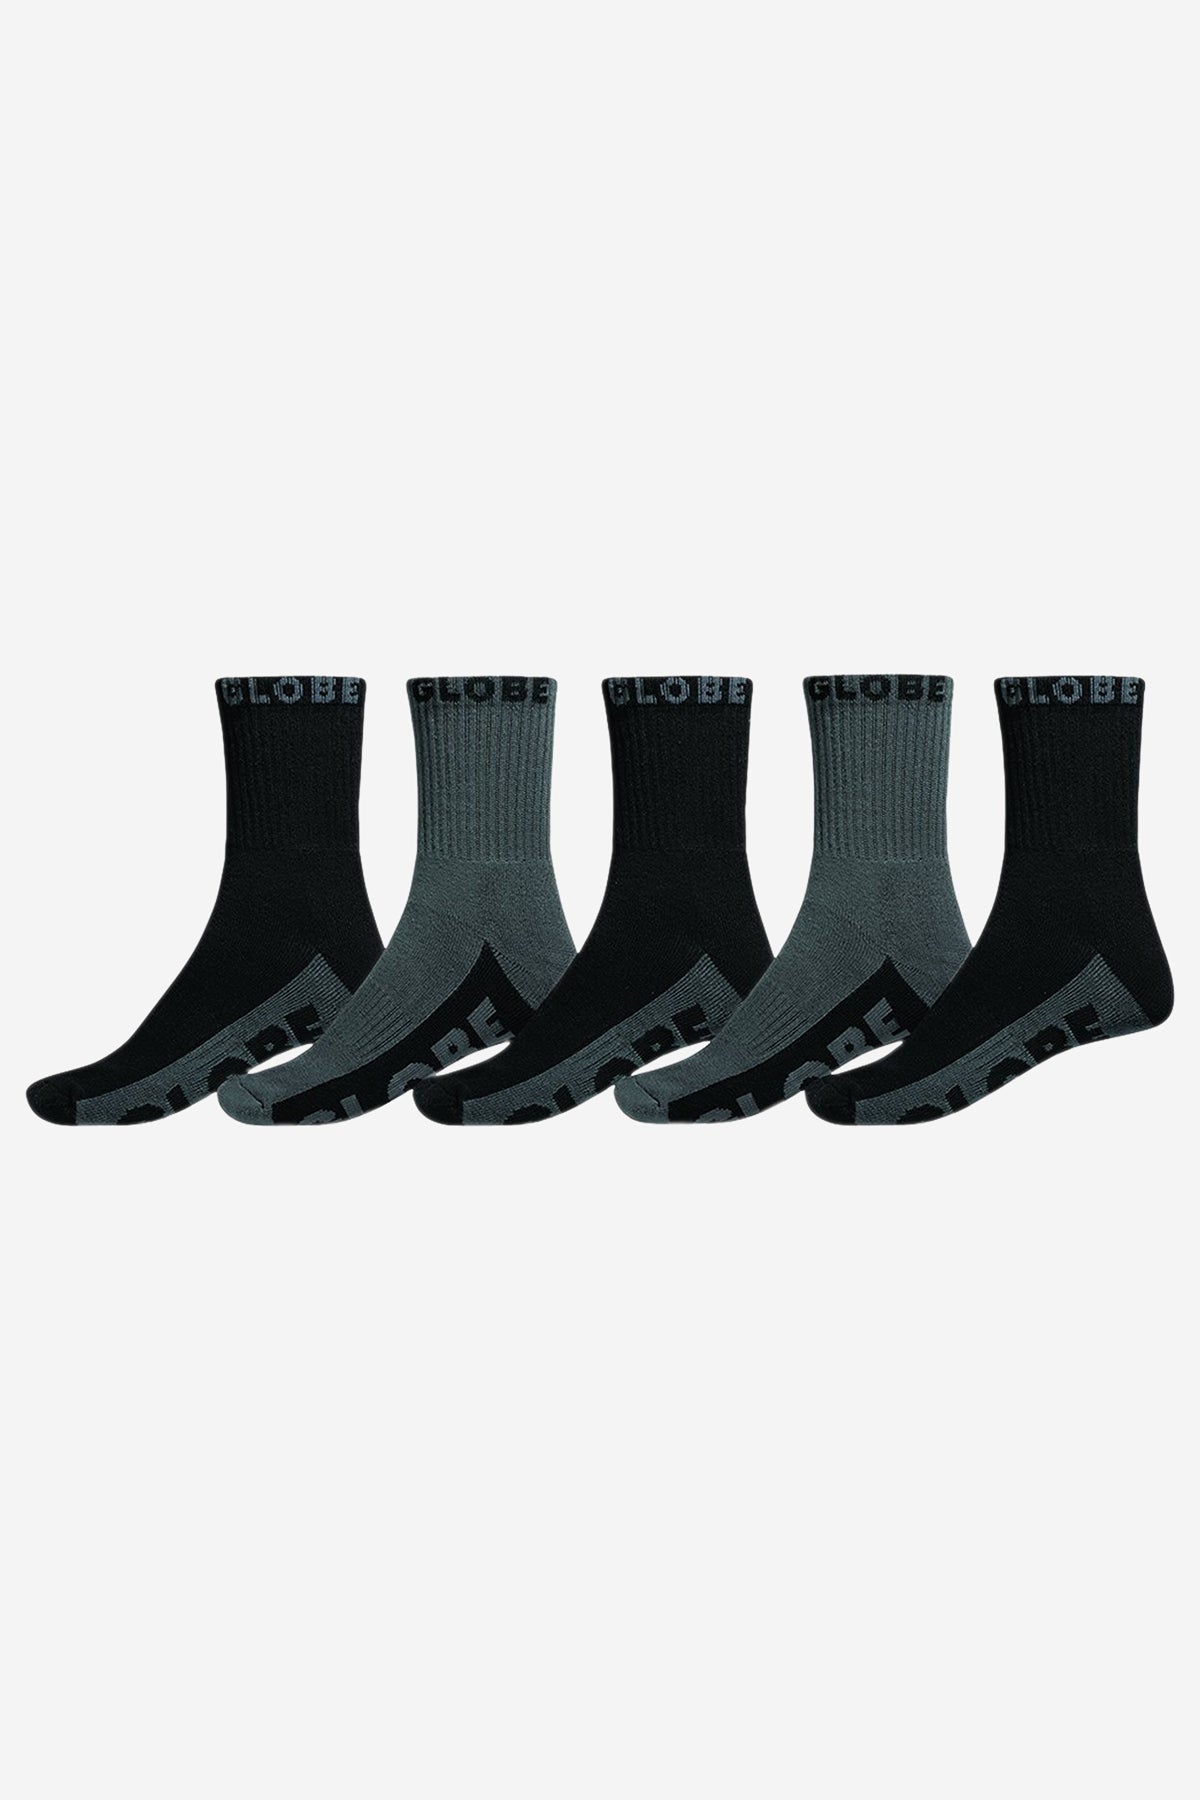 schwarz grau crew sock 5 pack